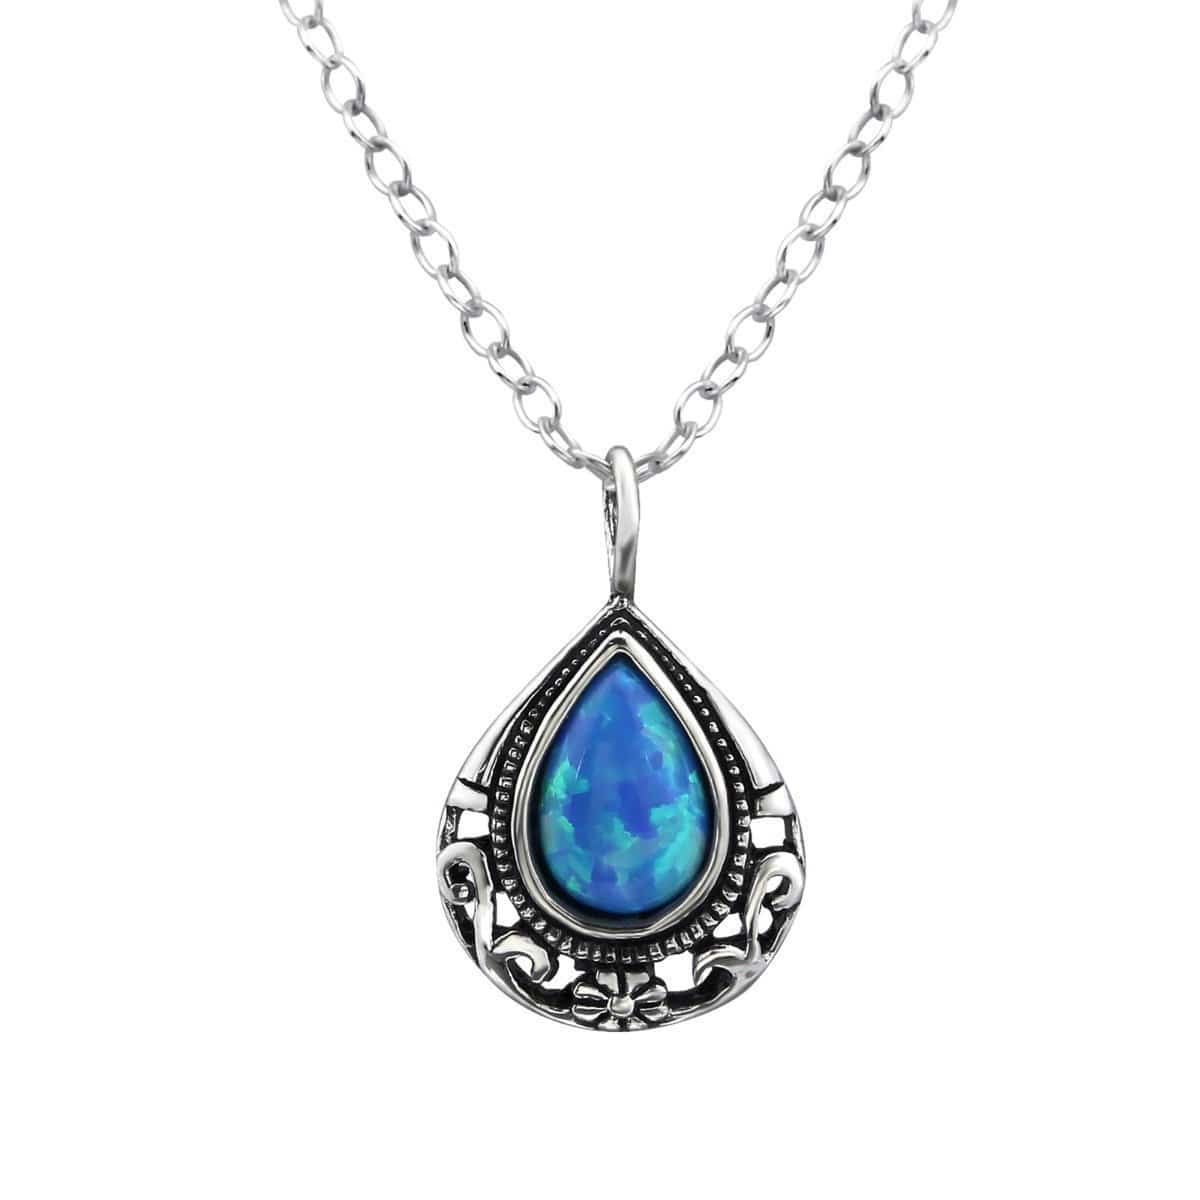 Silver Teardrop Necklace with Faux Opal